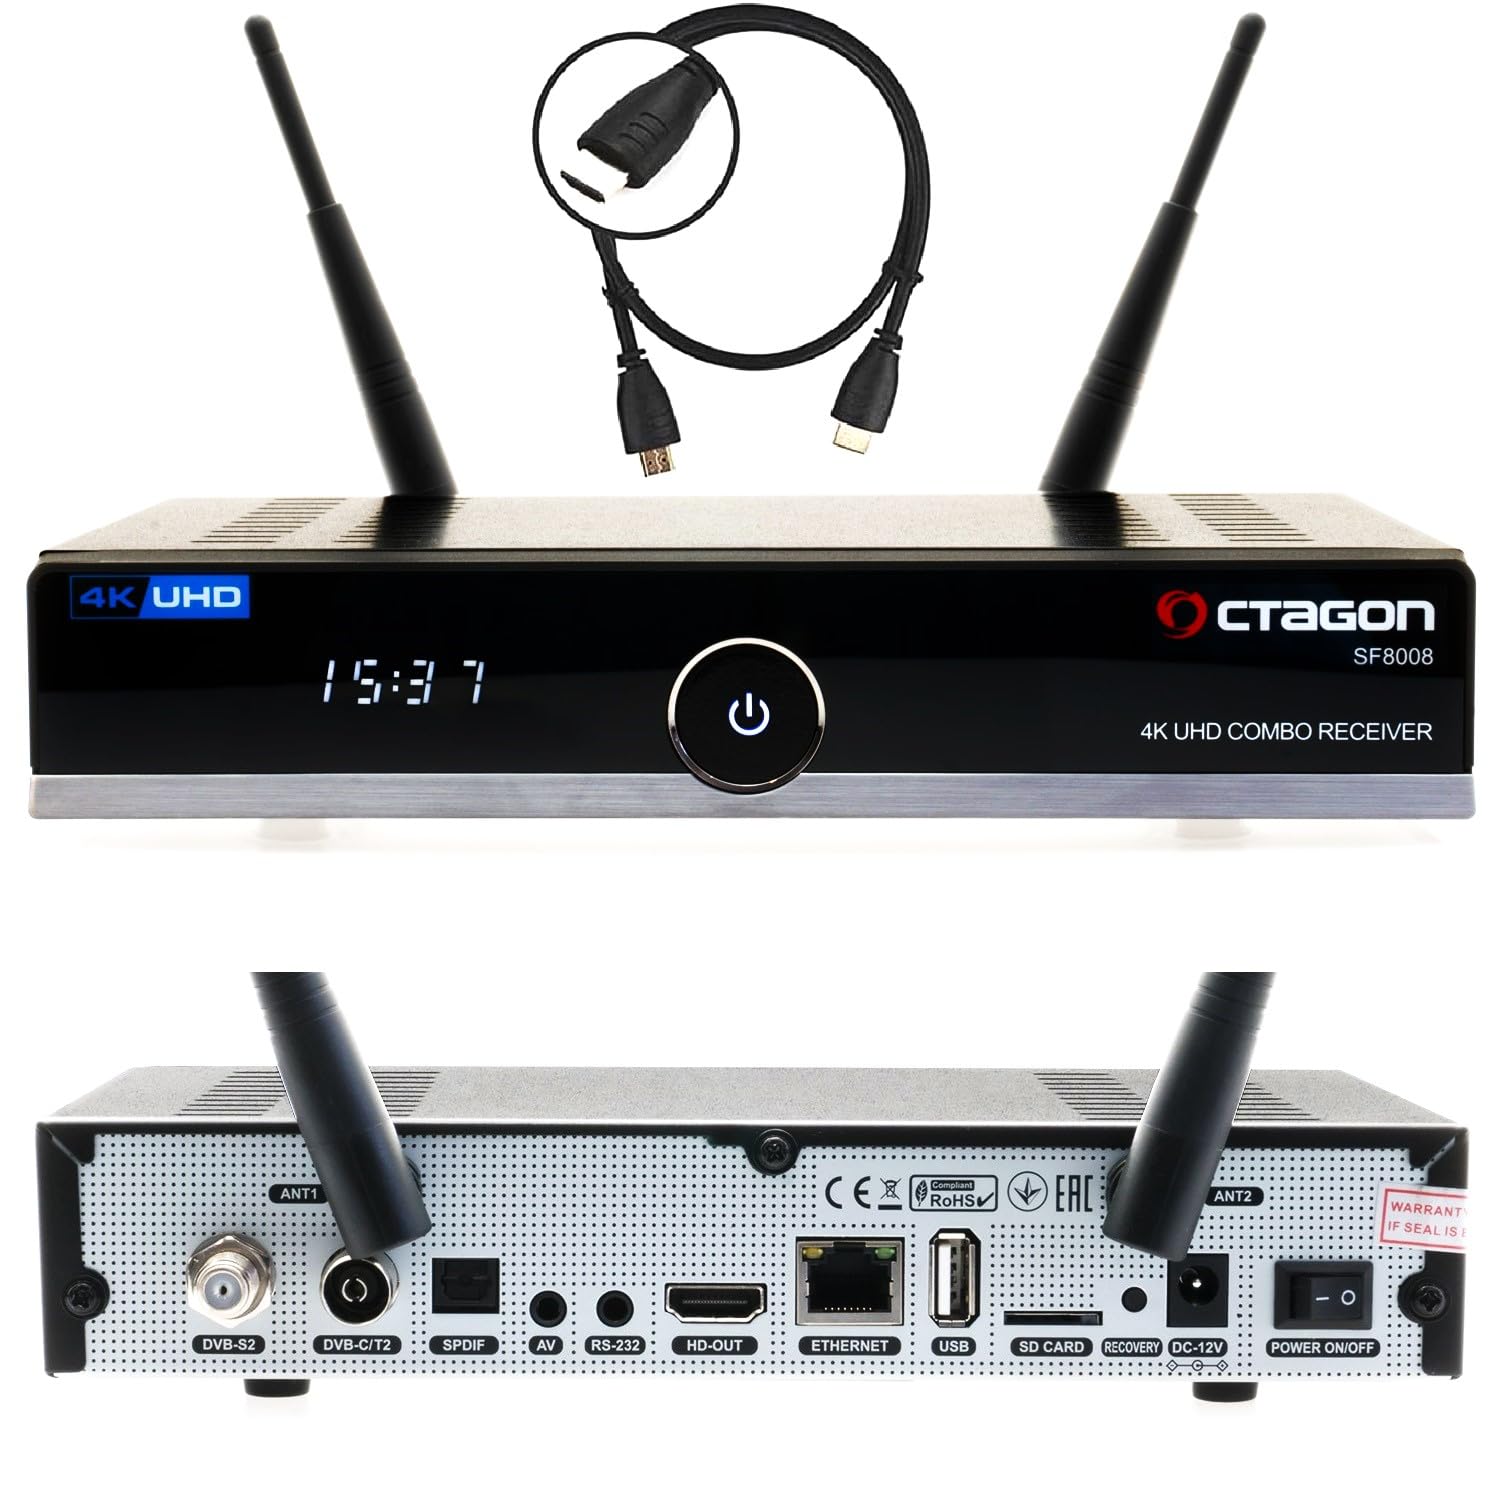 OCTAGON SF8008 UHD 4K Combo Receiver, Sat- Kabel- & DVB-T2 Receiver, E2 Linux & Define OS, DVB-S2X & T2C, mit PVR Aufnahmefunktion, Gigabit LAN, Kartenleser, Sat to IP, Multistream, H.265, WiFi